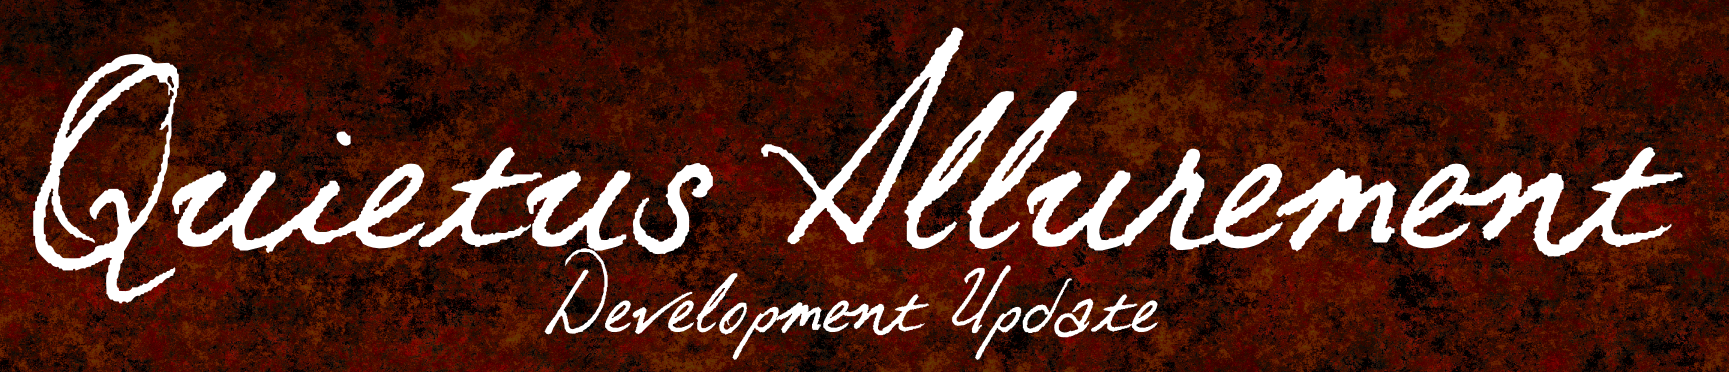 Quietus Allurement Development Update #1